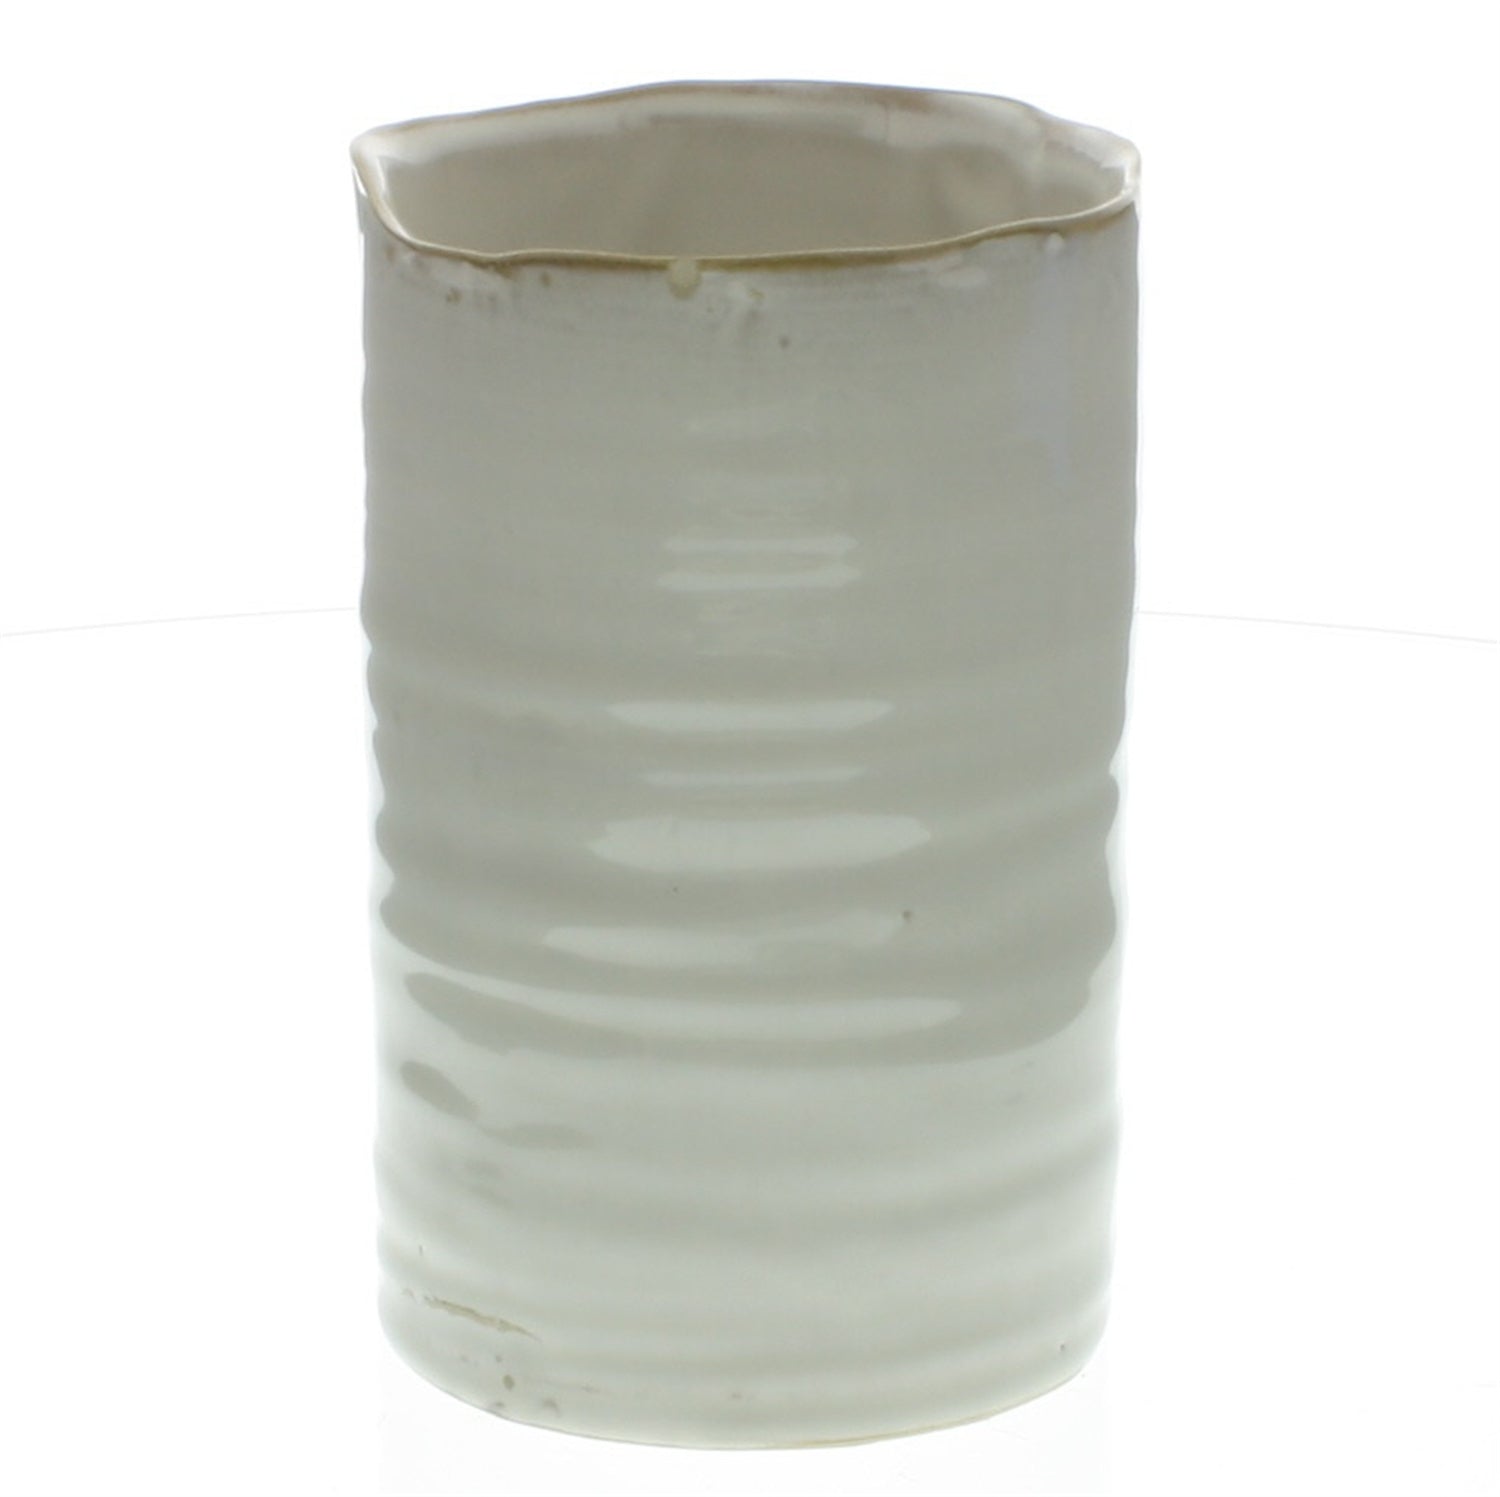 Bower Ceramic Vase, Small